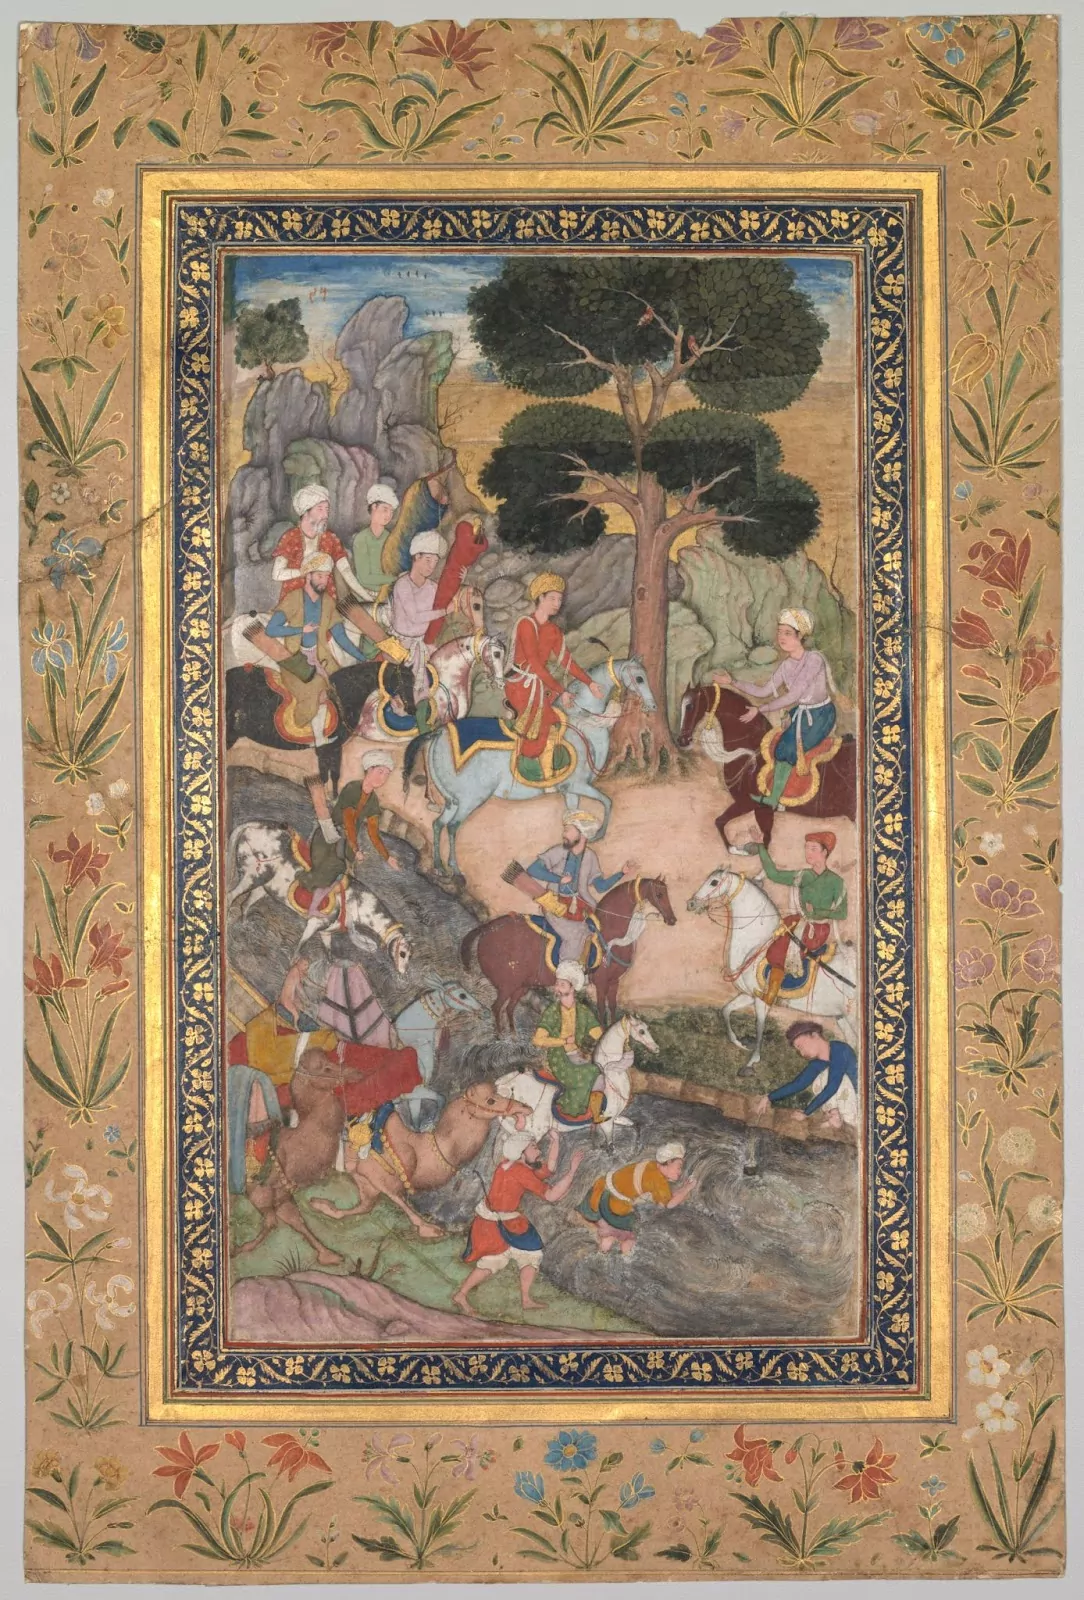 Babur meeting with Sultan Ali Mirza at the Kohik River, from a Babur-nama (Memoirs of Babur) c. 1590. Image credit: Cleveland Museum of Art